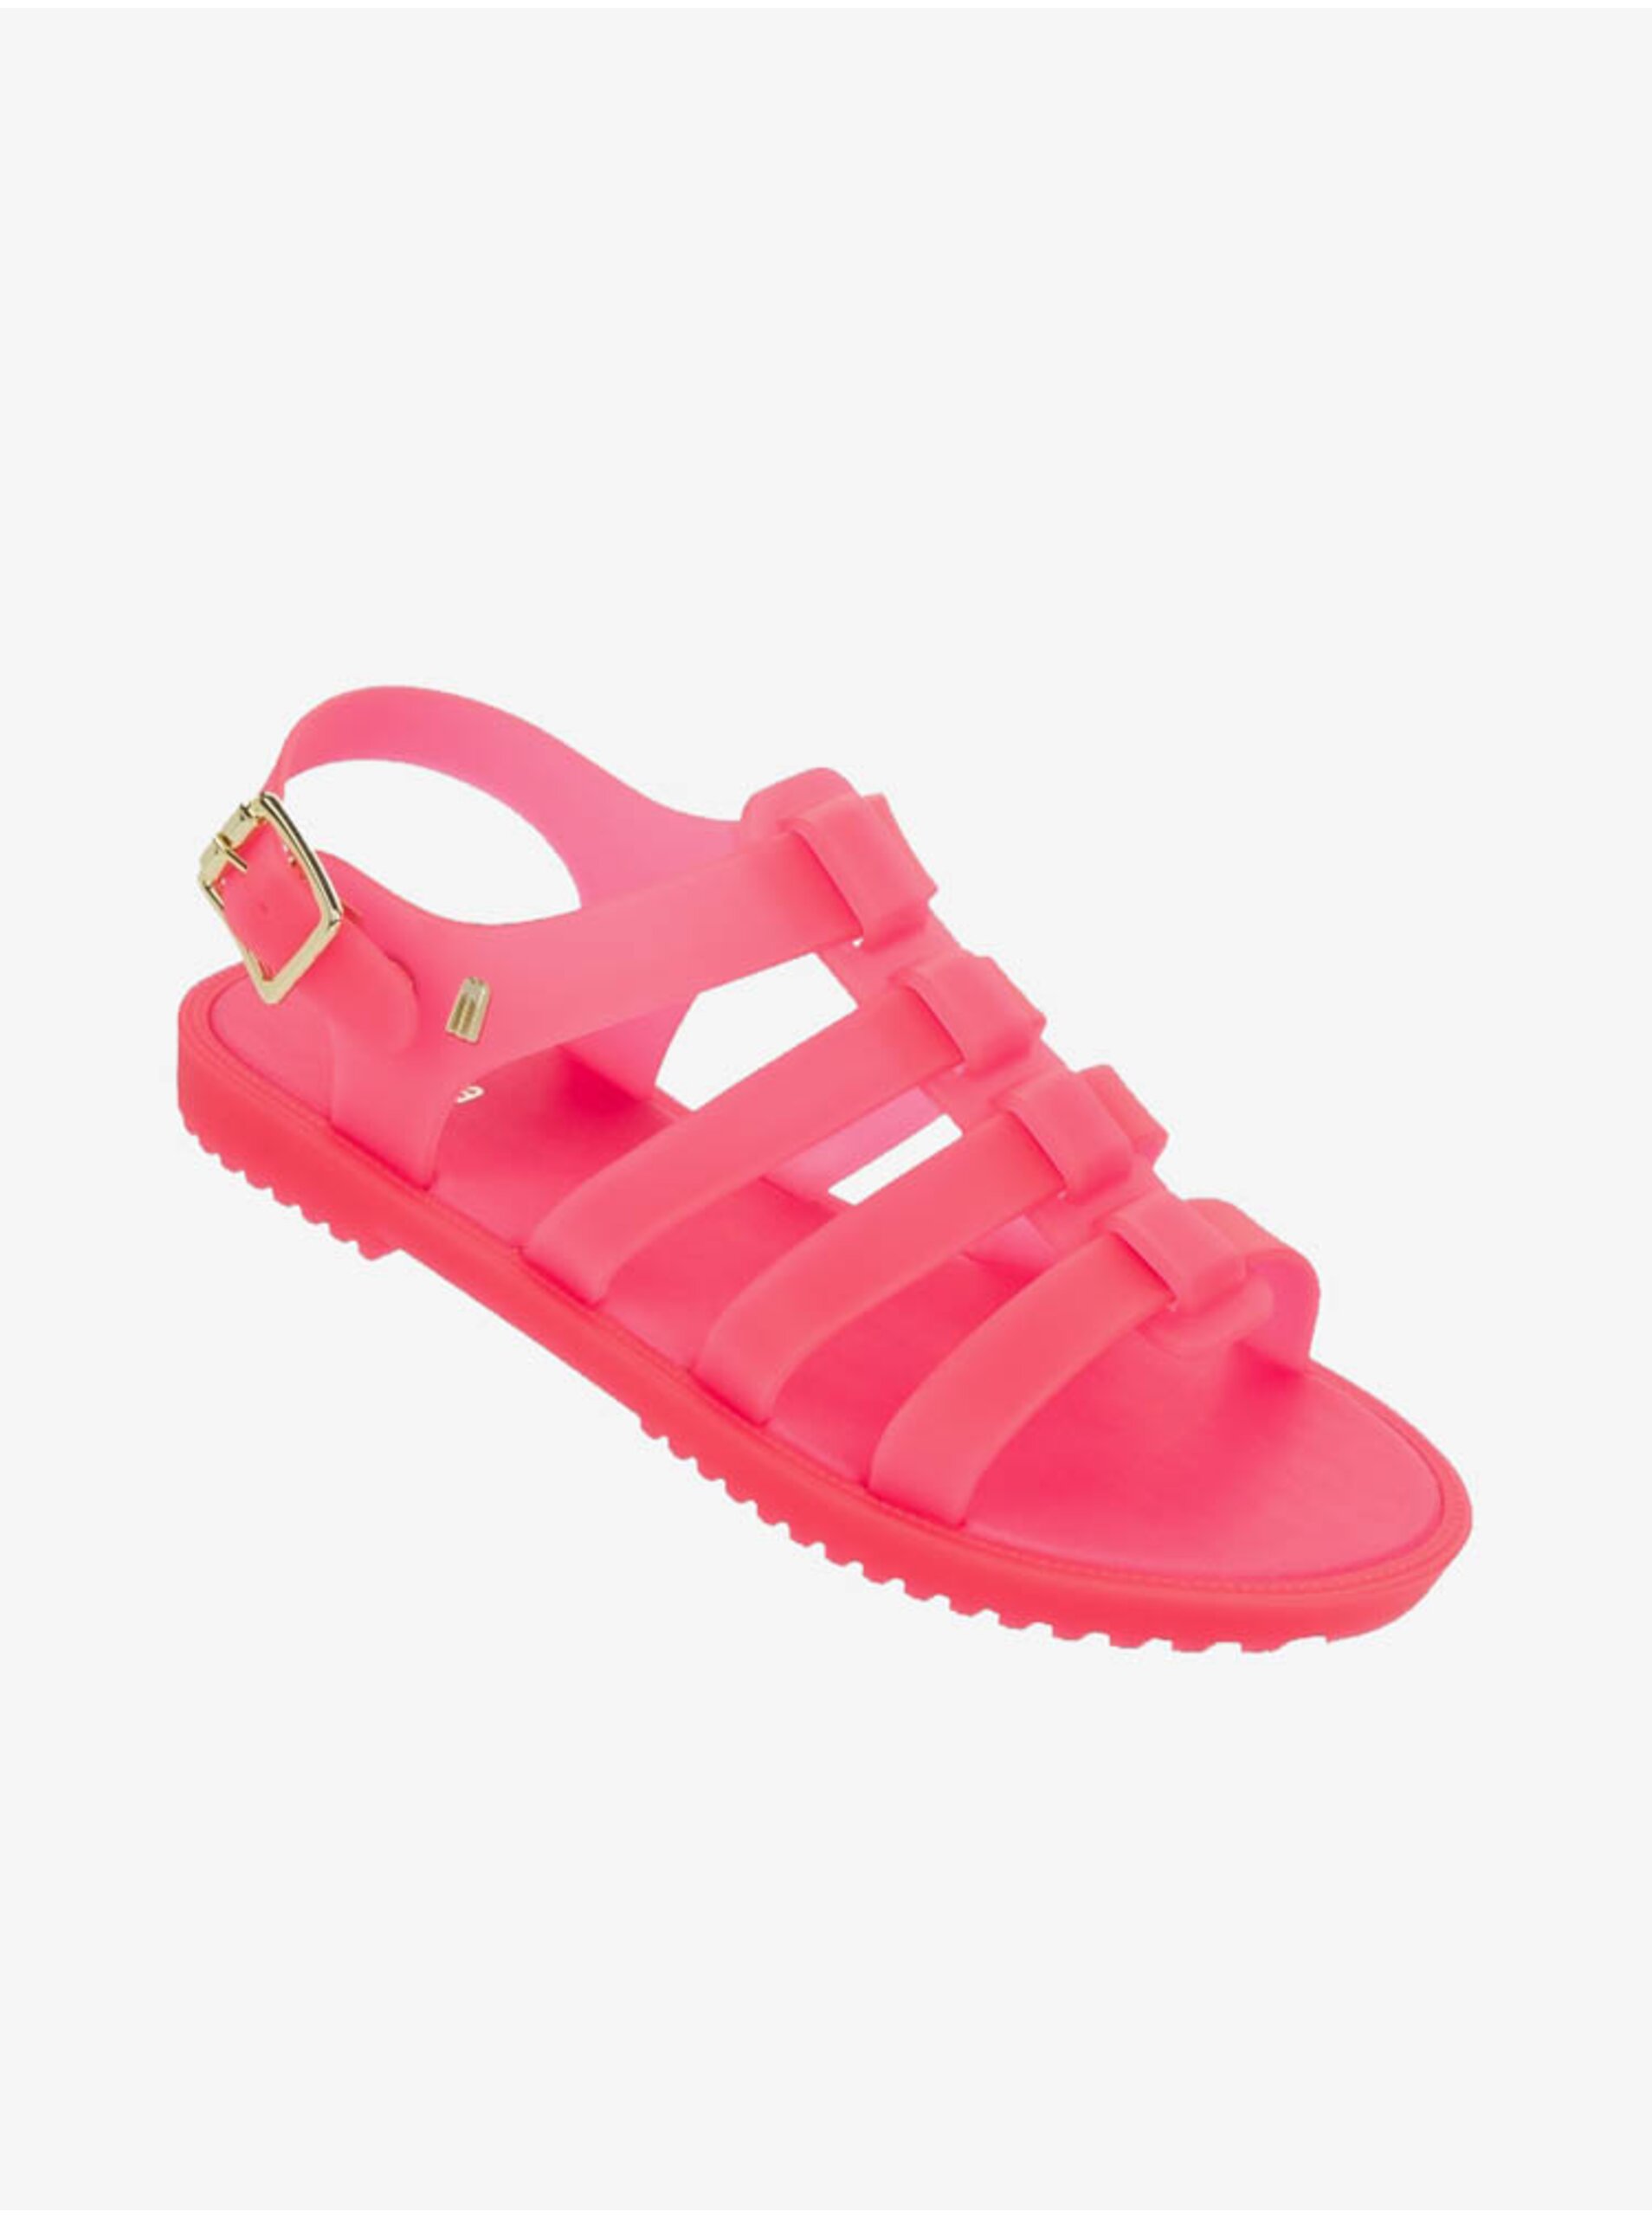 E-shop Ružové dámske sandálky Melissa Flox